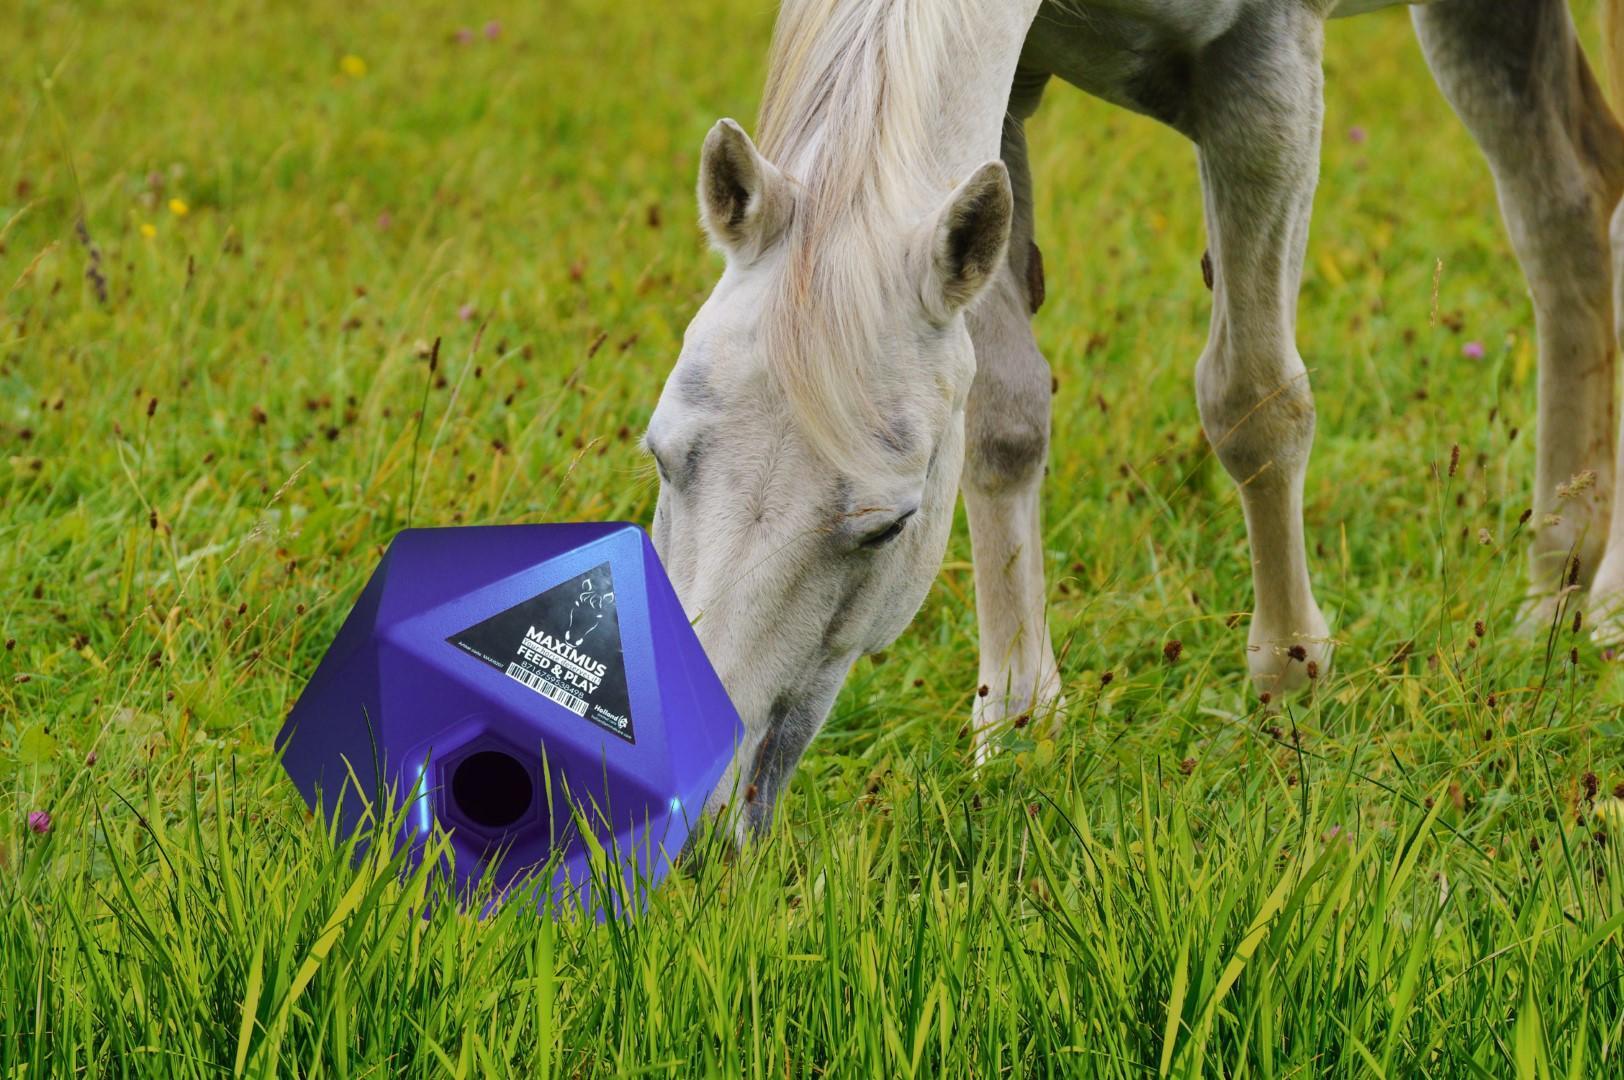 Reny feeding toy for horses